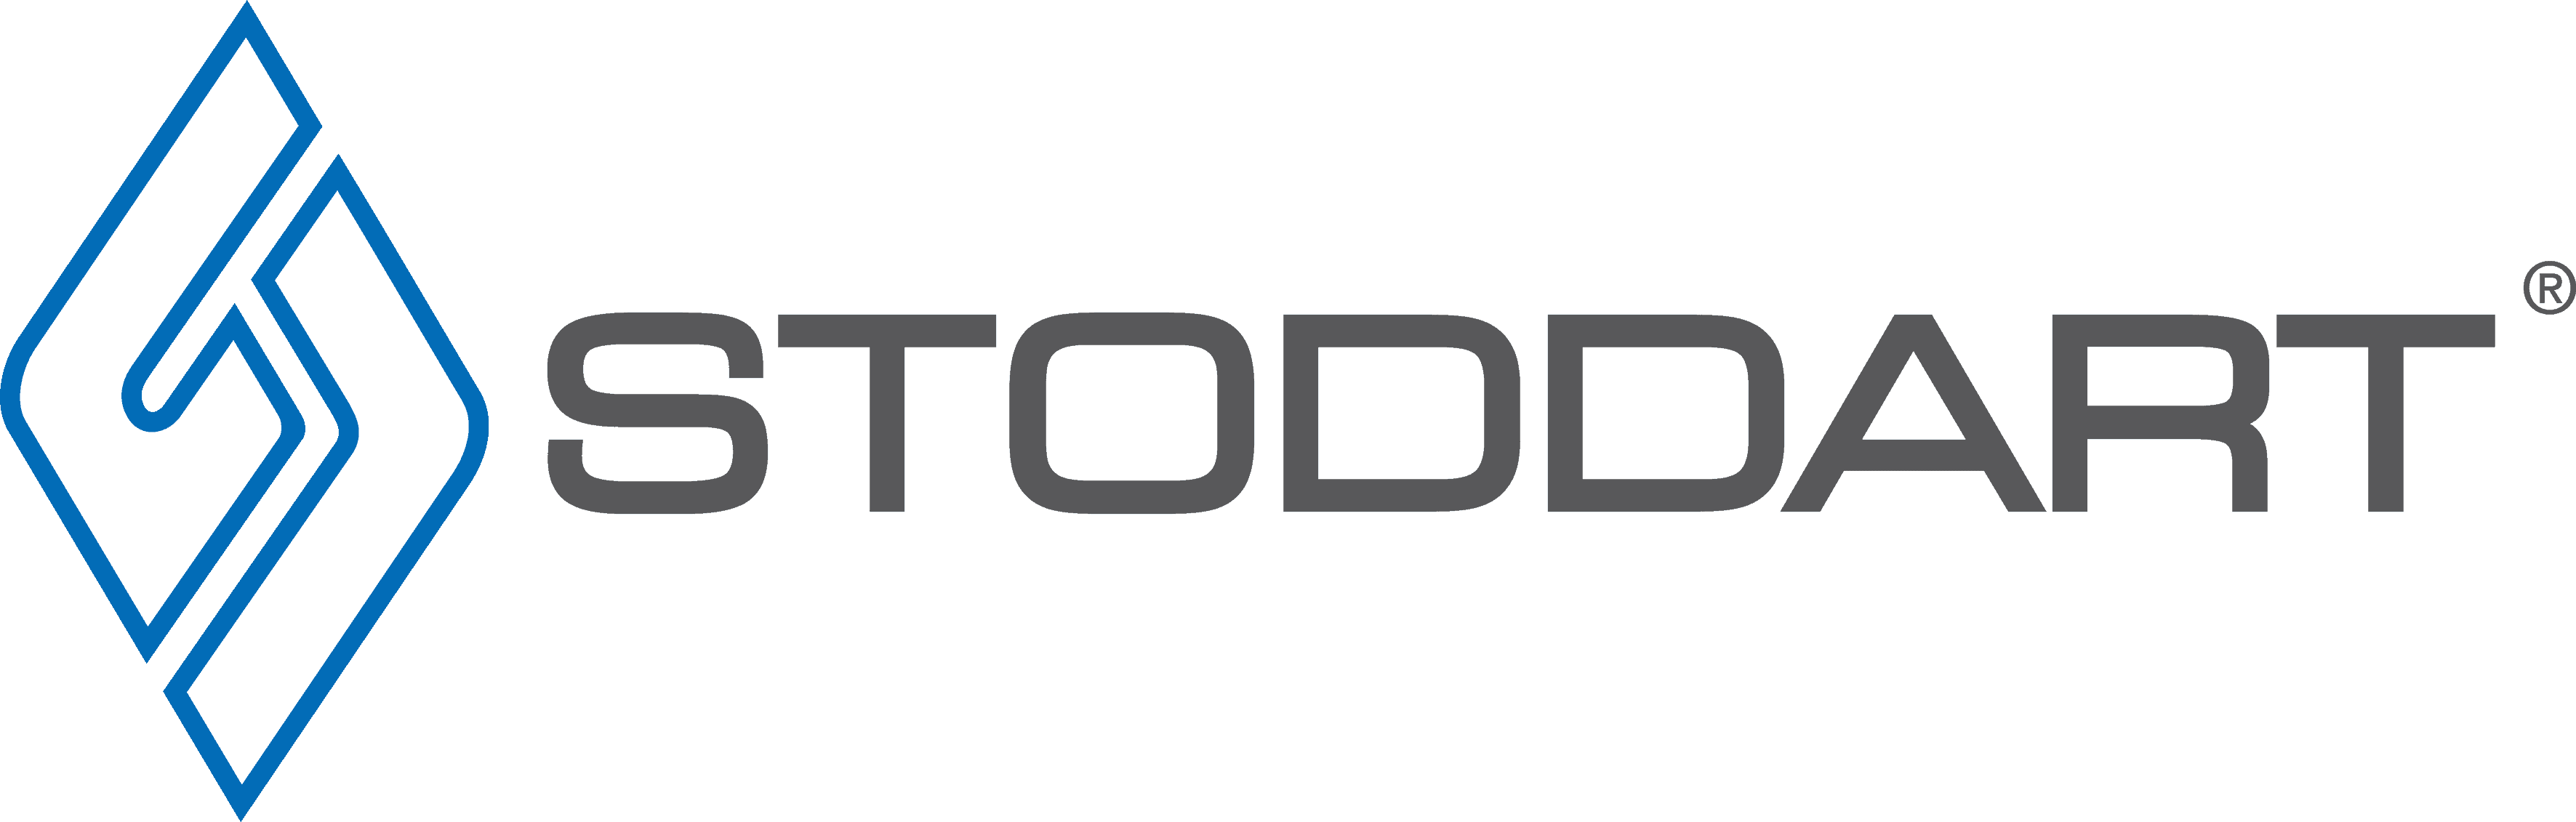 CTL - Stoddart Logo